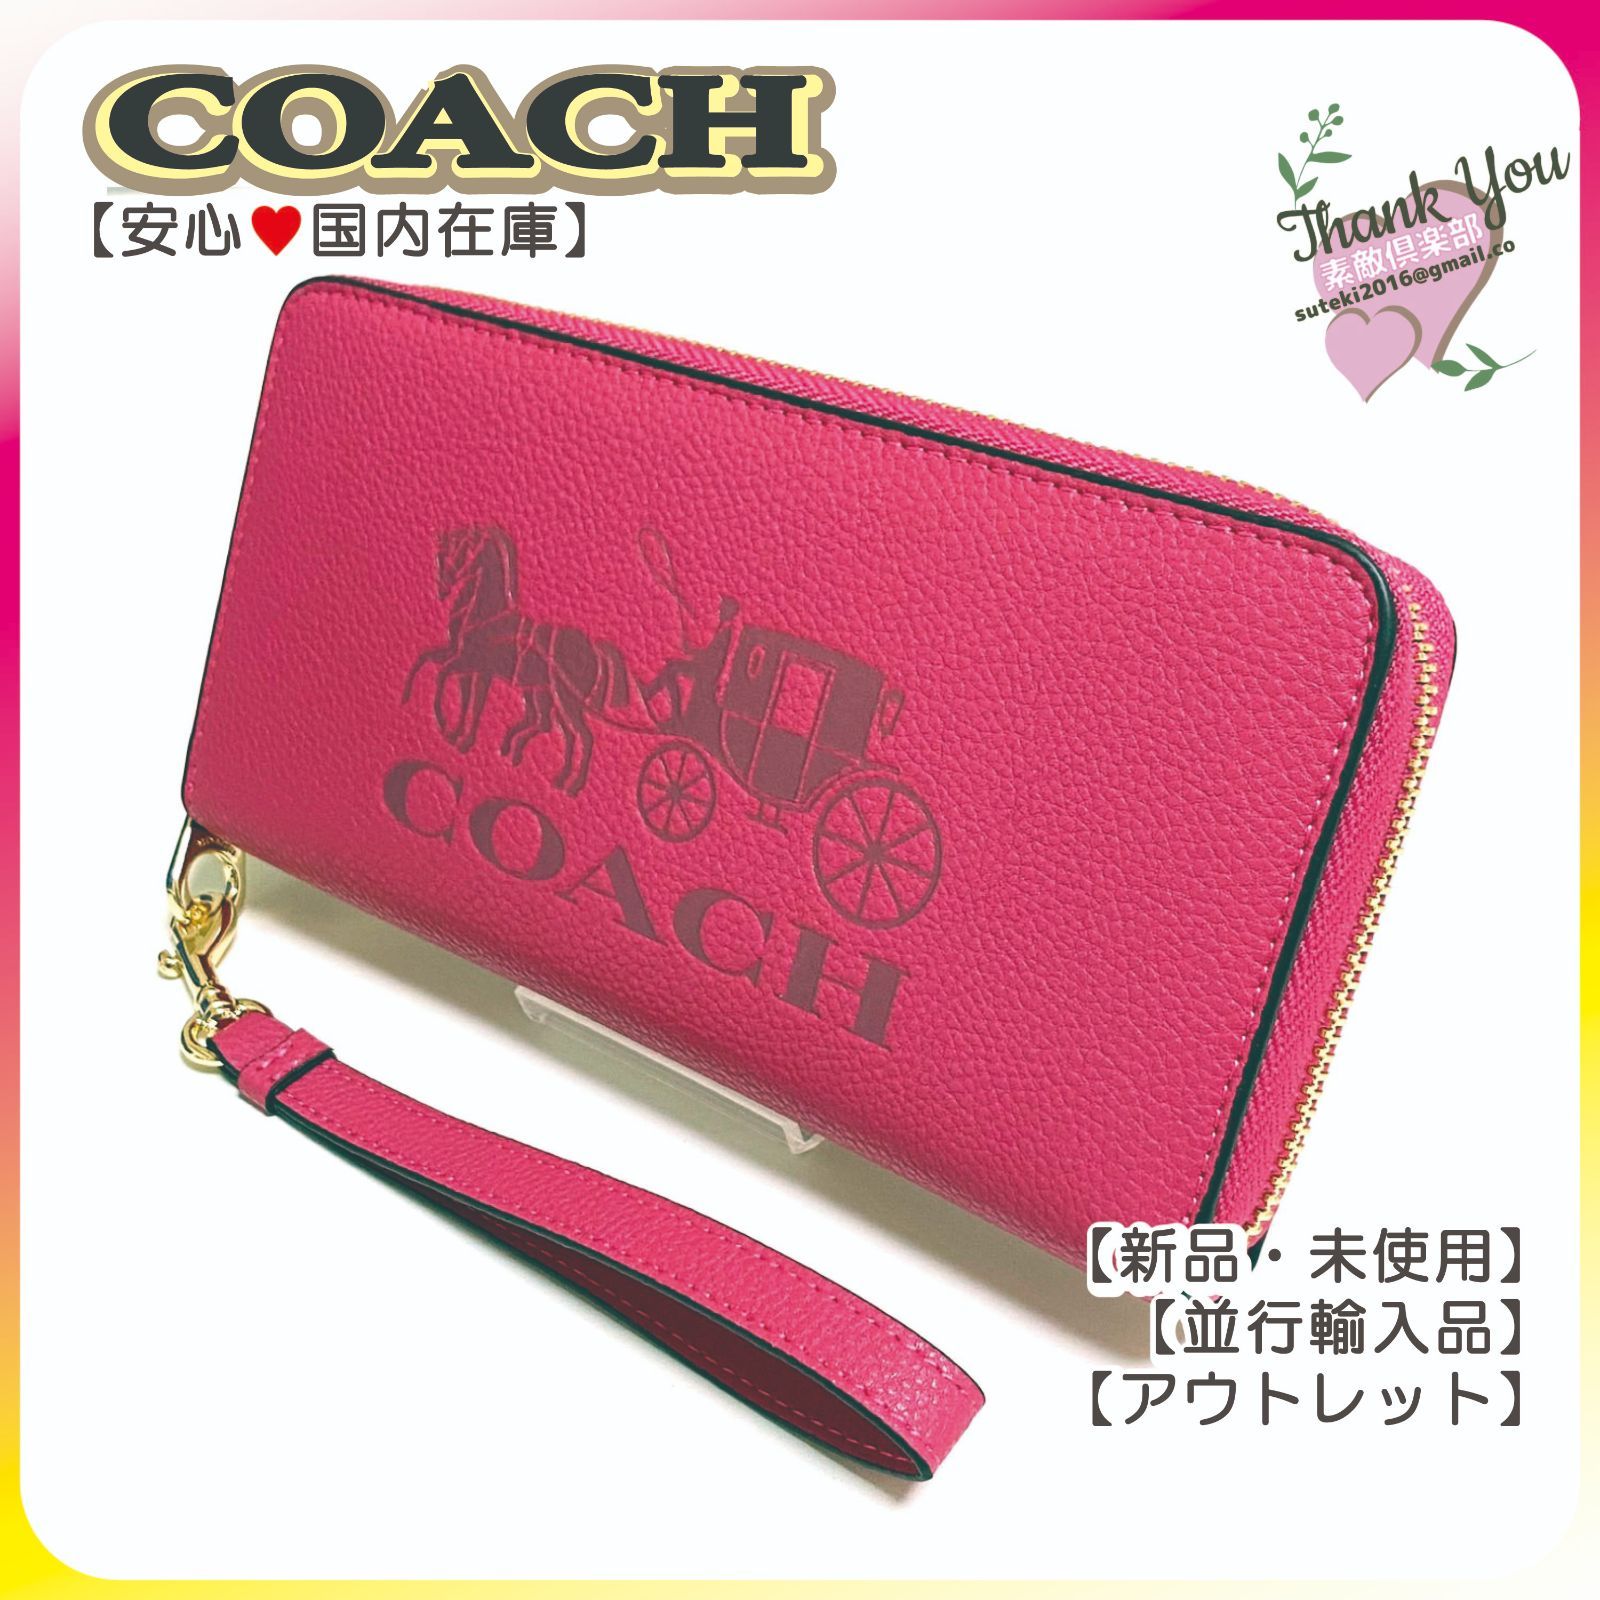 COACH コーチ長財布 ホース アンド キャリッジ C5889 ピンク - 長財布